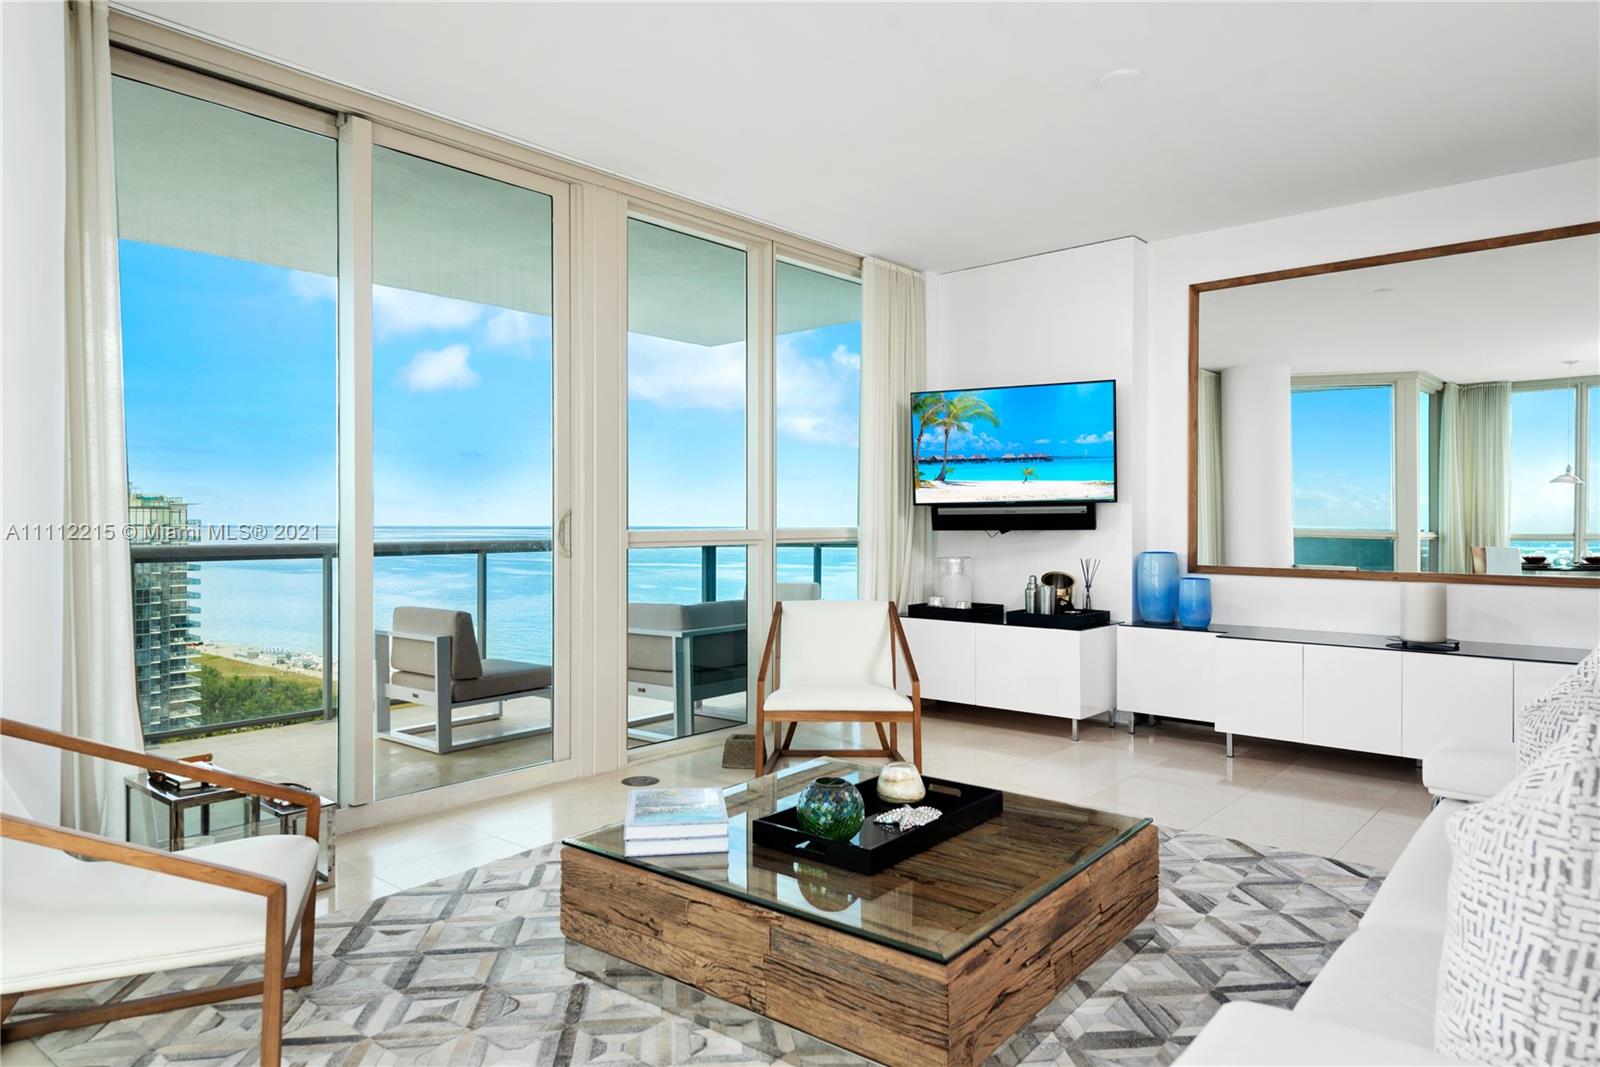 View Miami Beach, FL 33139 multi-family property